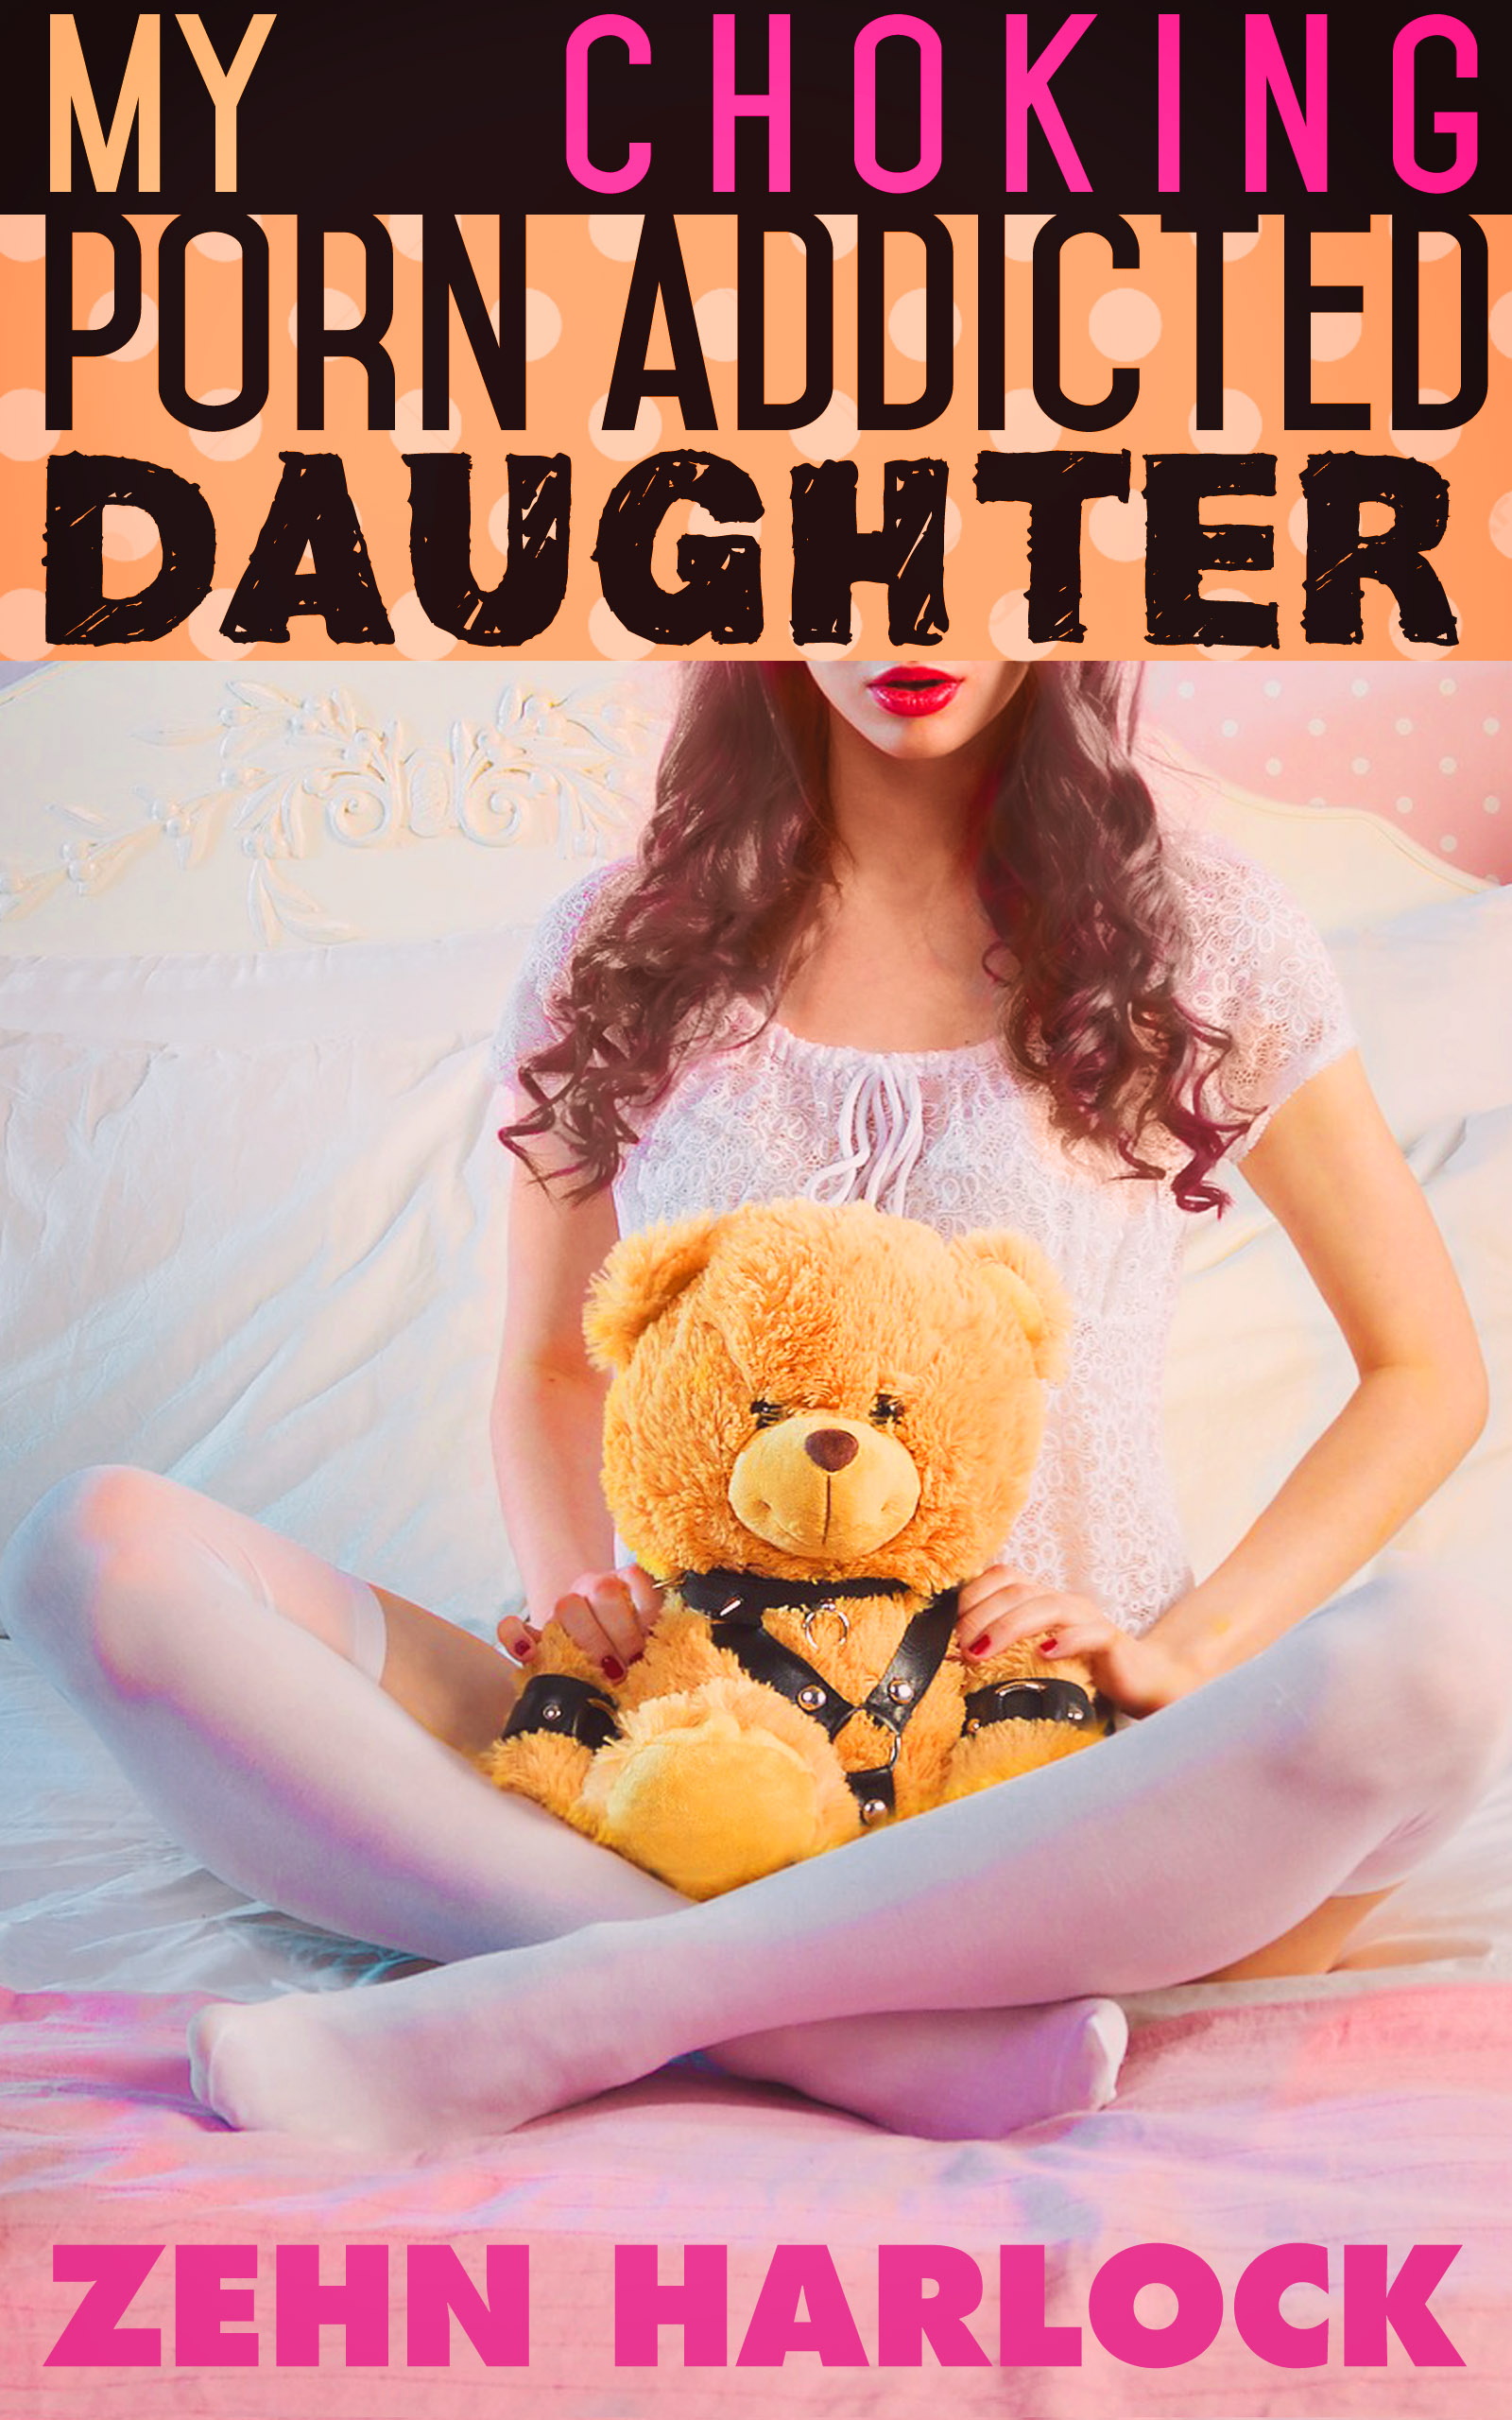 My Choking Porn Addicted Daughter, an Ebook by Zehn Harlock